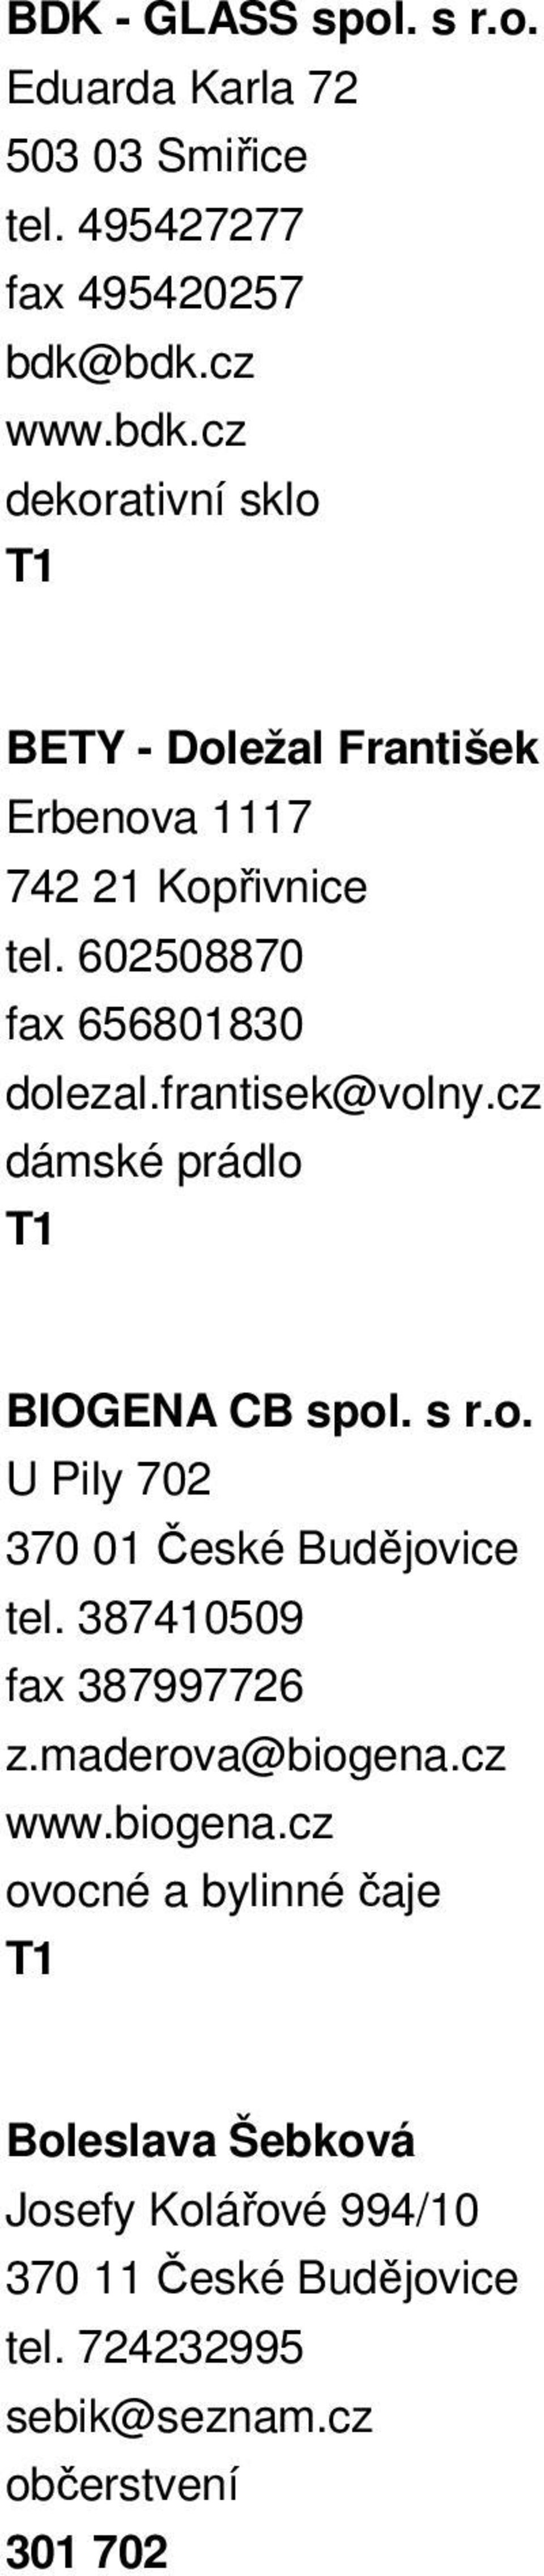 frantisek@volny.cz dámské prádlo BIOGENA CB spol. s r.o. U Pily 702 370 01 České Budějovice tel. 387410509 fax 387997726 z.